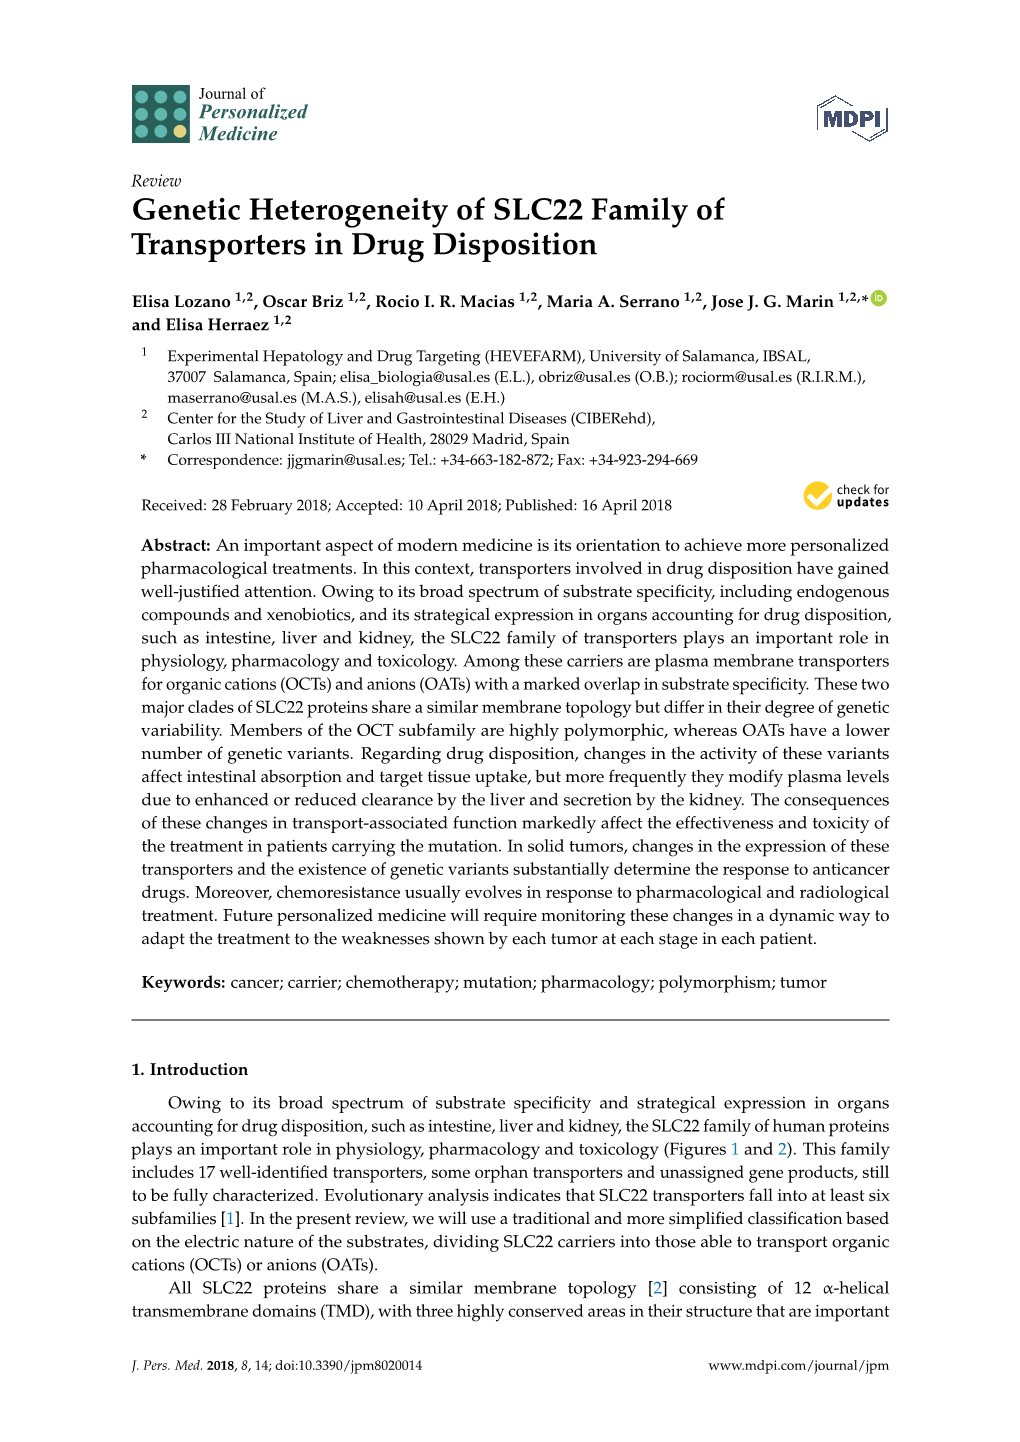 Genetic Heterogeneity of SLC22 Family of Transporters in Drug Disposition